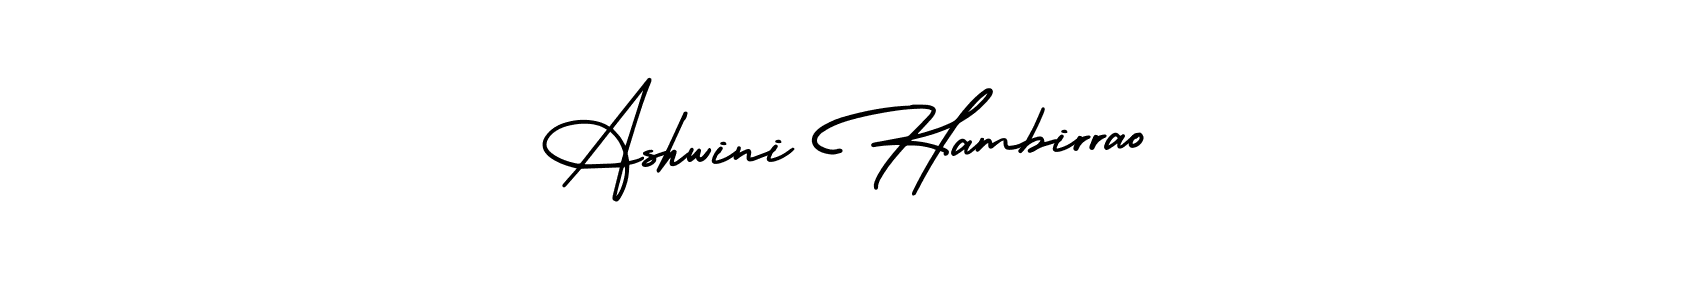 How to Draw Ashwini Hambirrao signature style? AmerikaSignatureDemo-Regular is a latest design signature styles for name Ashwini Hambirrao. Ashwini Hambirrao signature style 3 images and pictures png